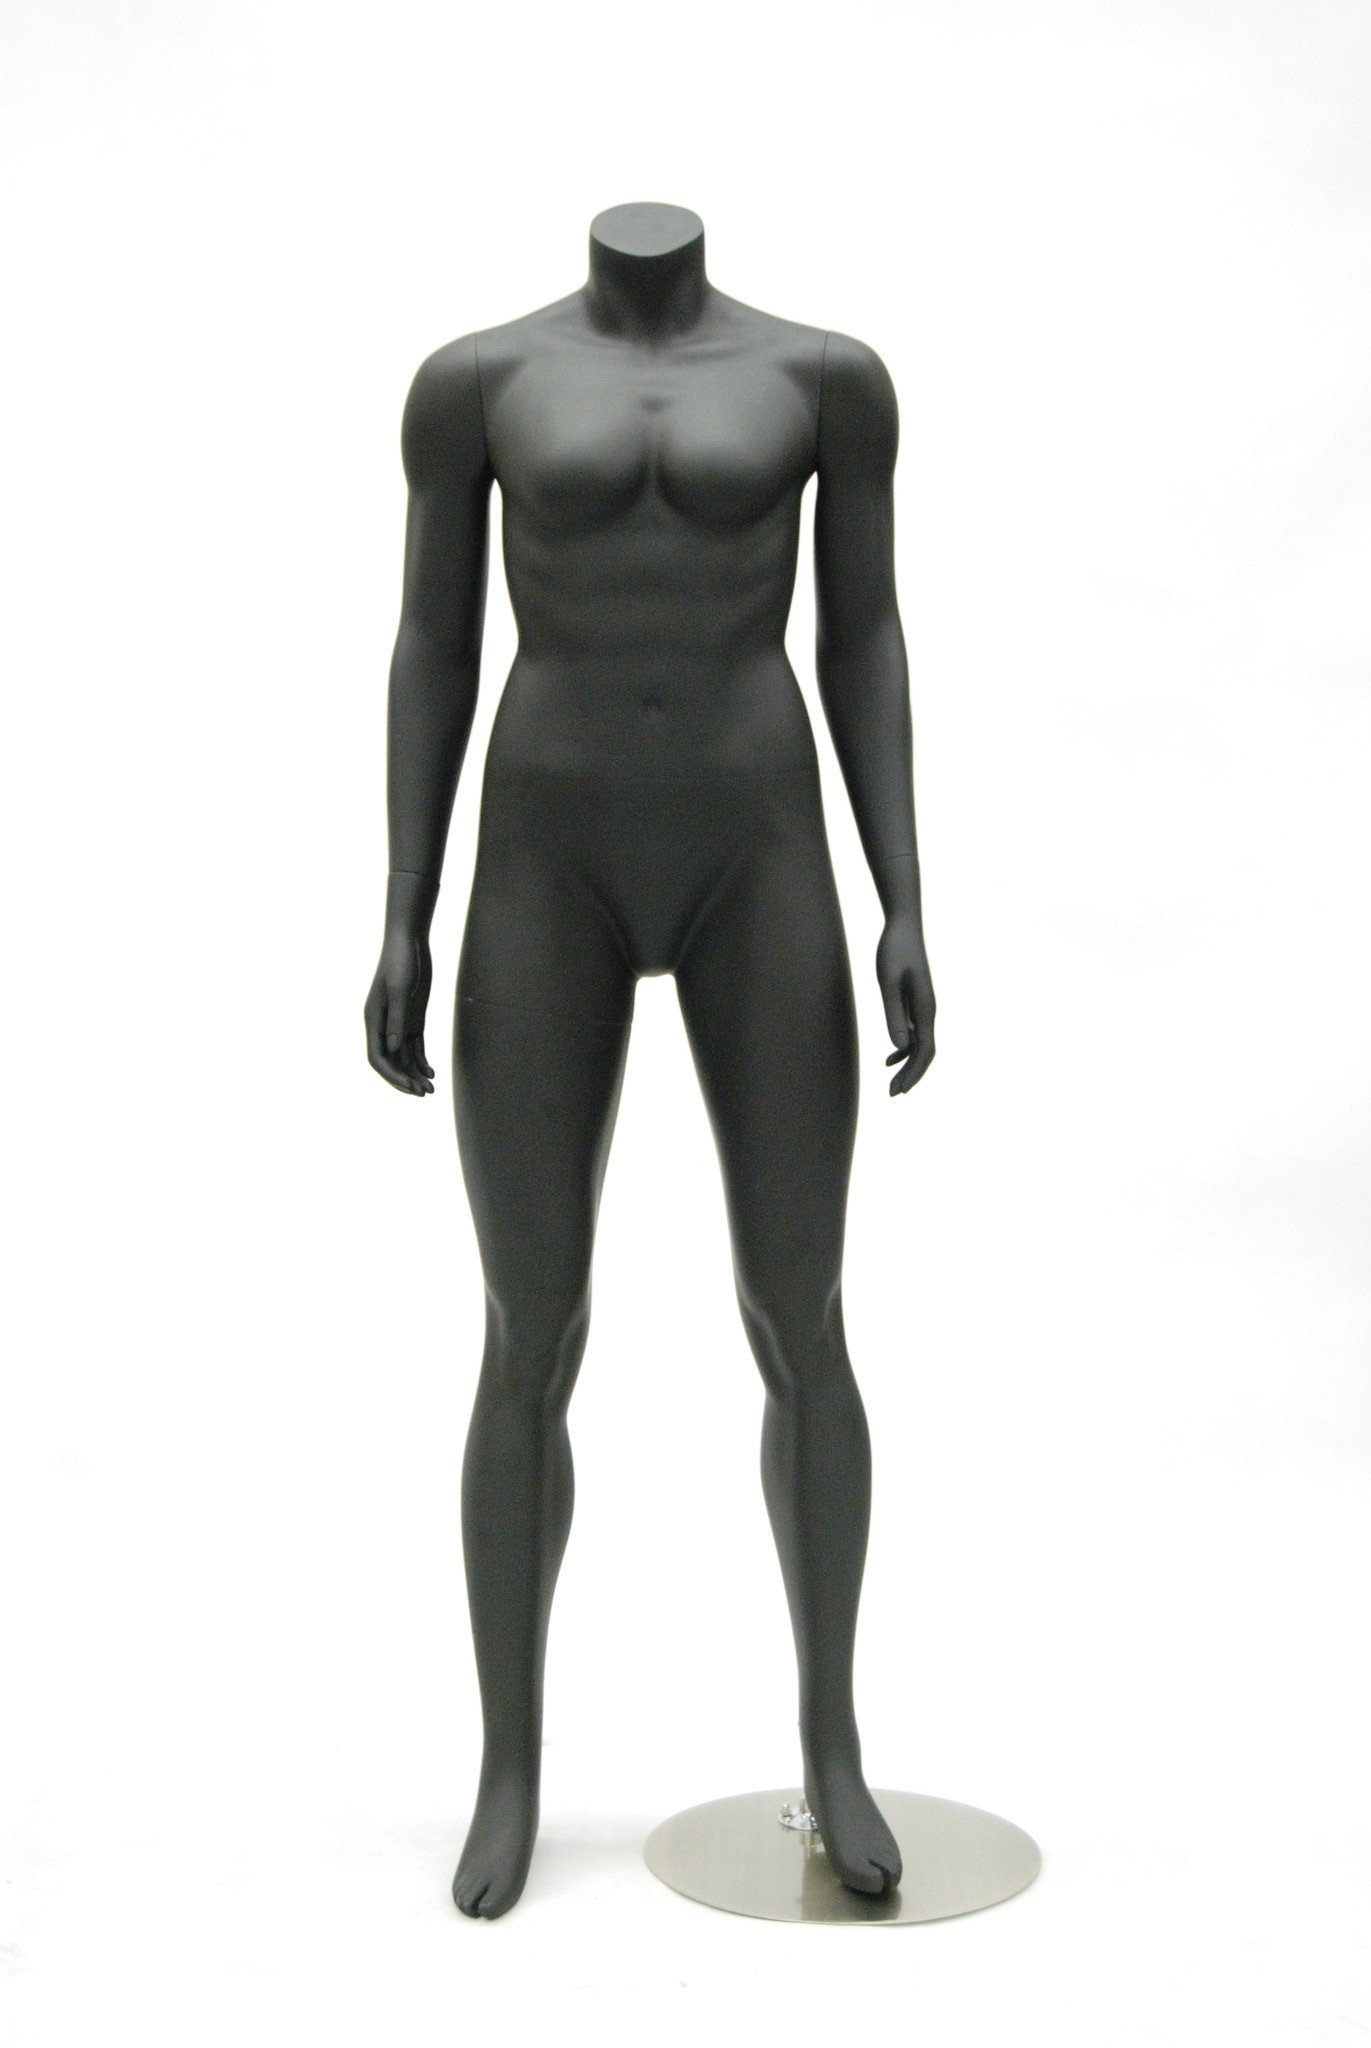 Athletic Headless Female Mannequin MM-HUSKYFEMBB - Mannequin Mall